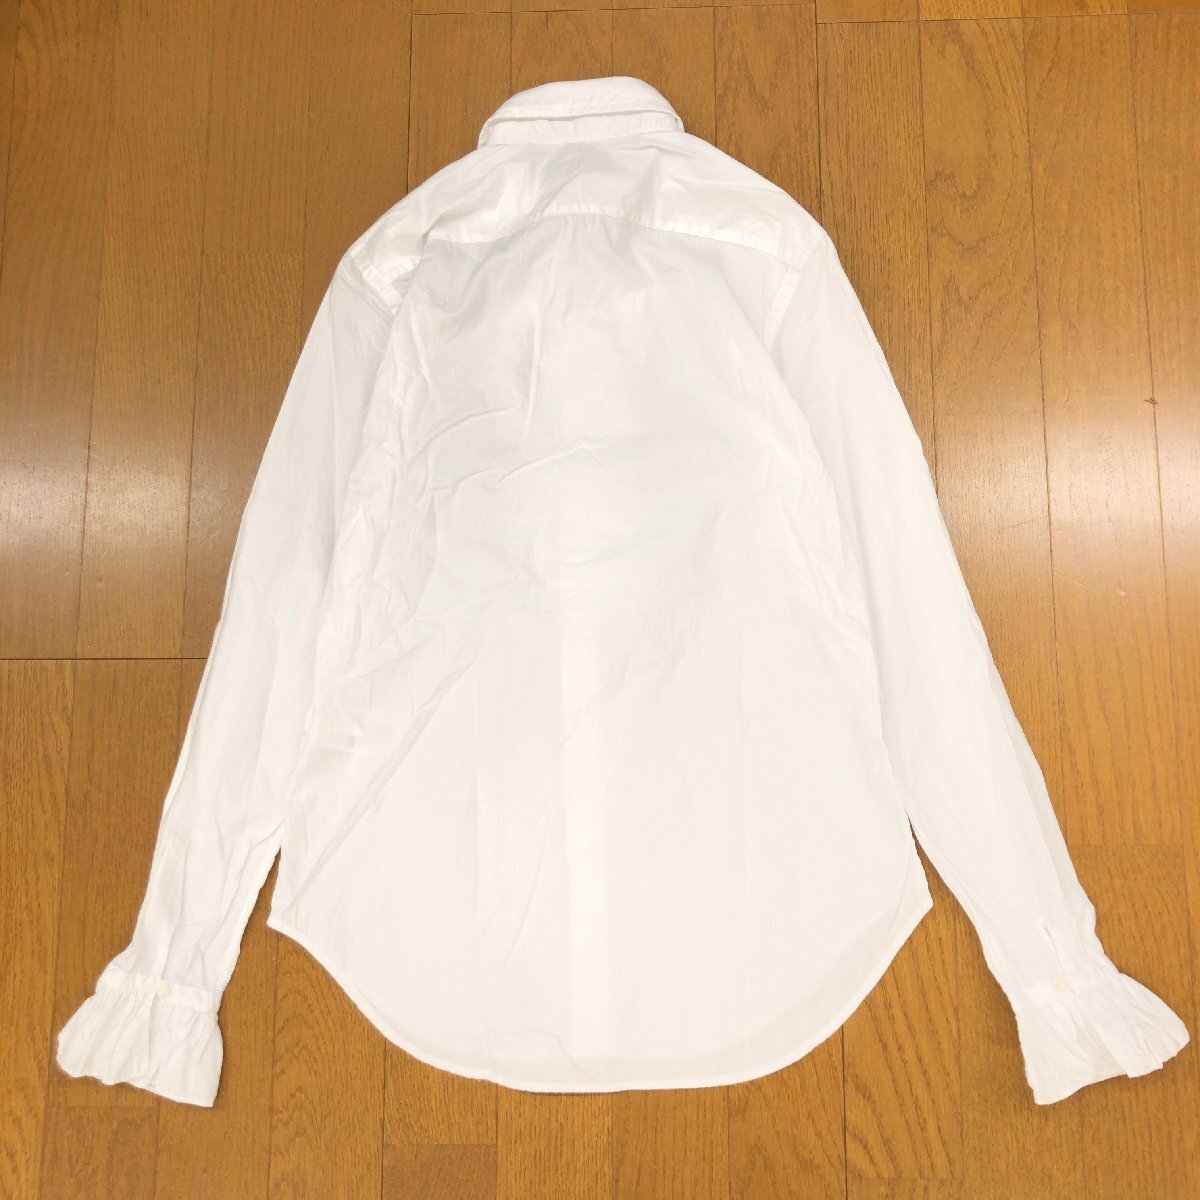  beautiful goods POLO RALPH LAUREN Polo Ralph Lauren cotton 100% frill shirt 2 white white blouse long sleeve domestic regular goods lady's 